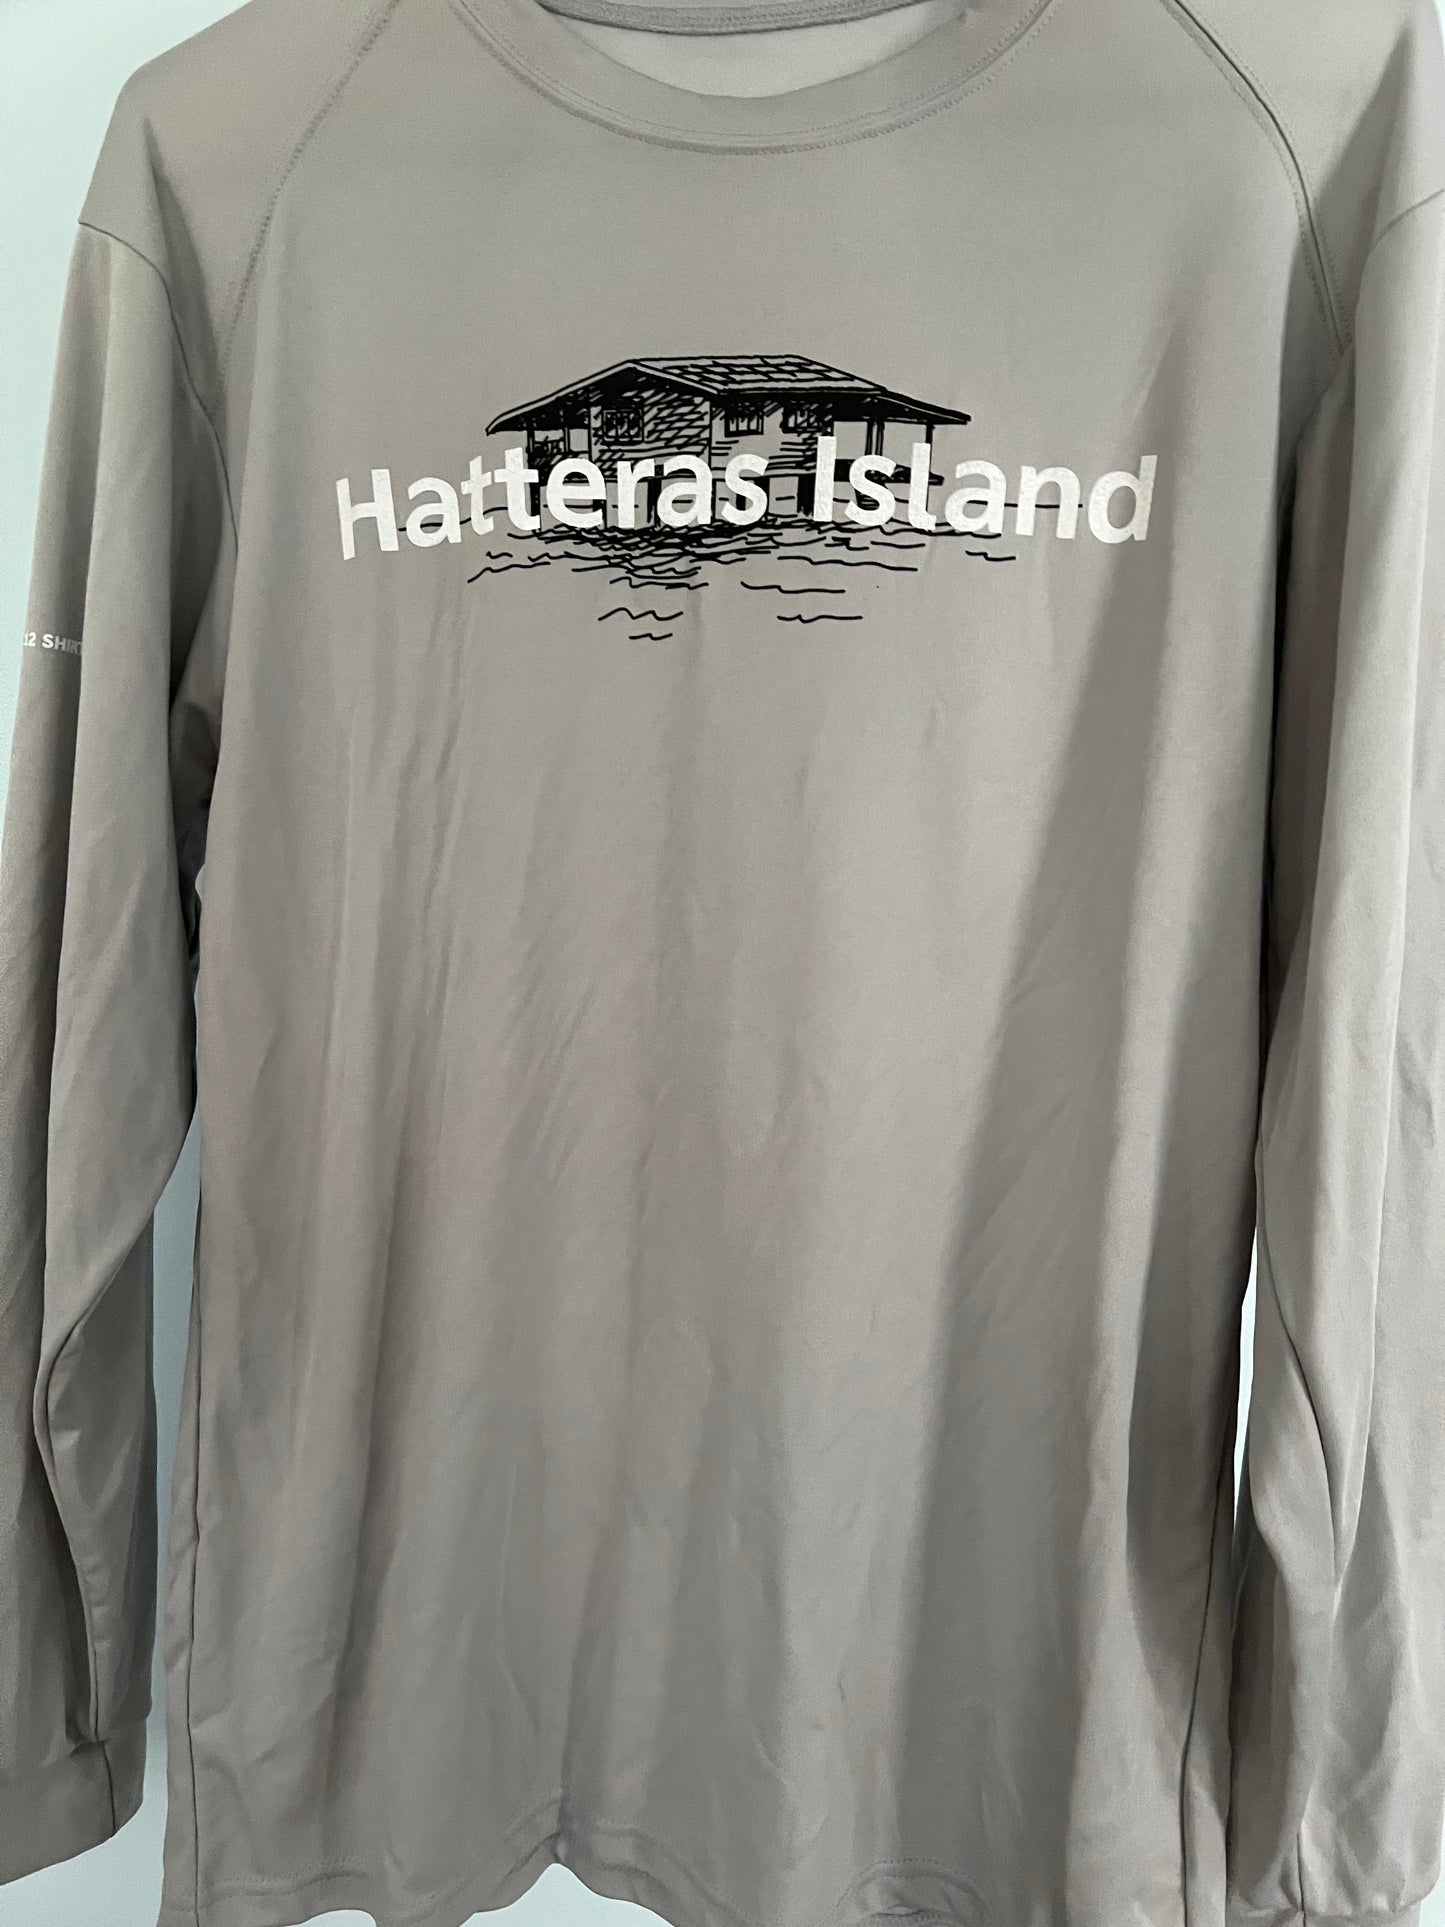 Hatteras Island long sleeve - Highway12Shirts